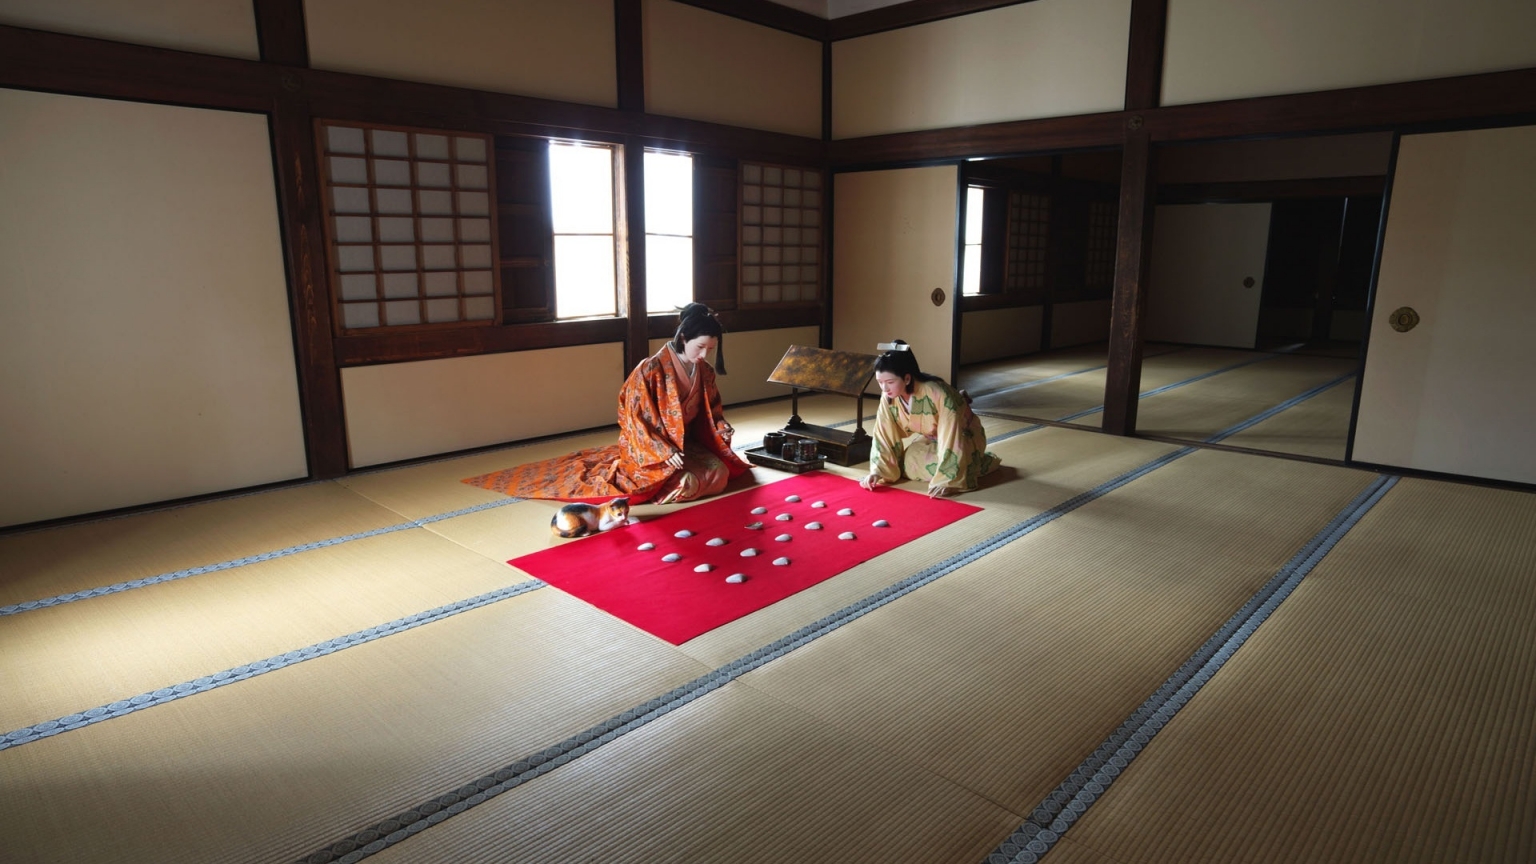 Japanese traditional women for 1536 x 864 HDTV resolution